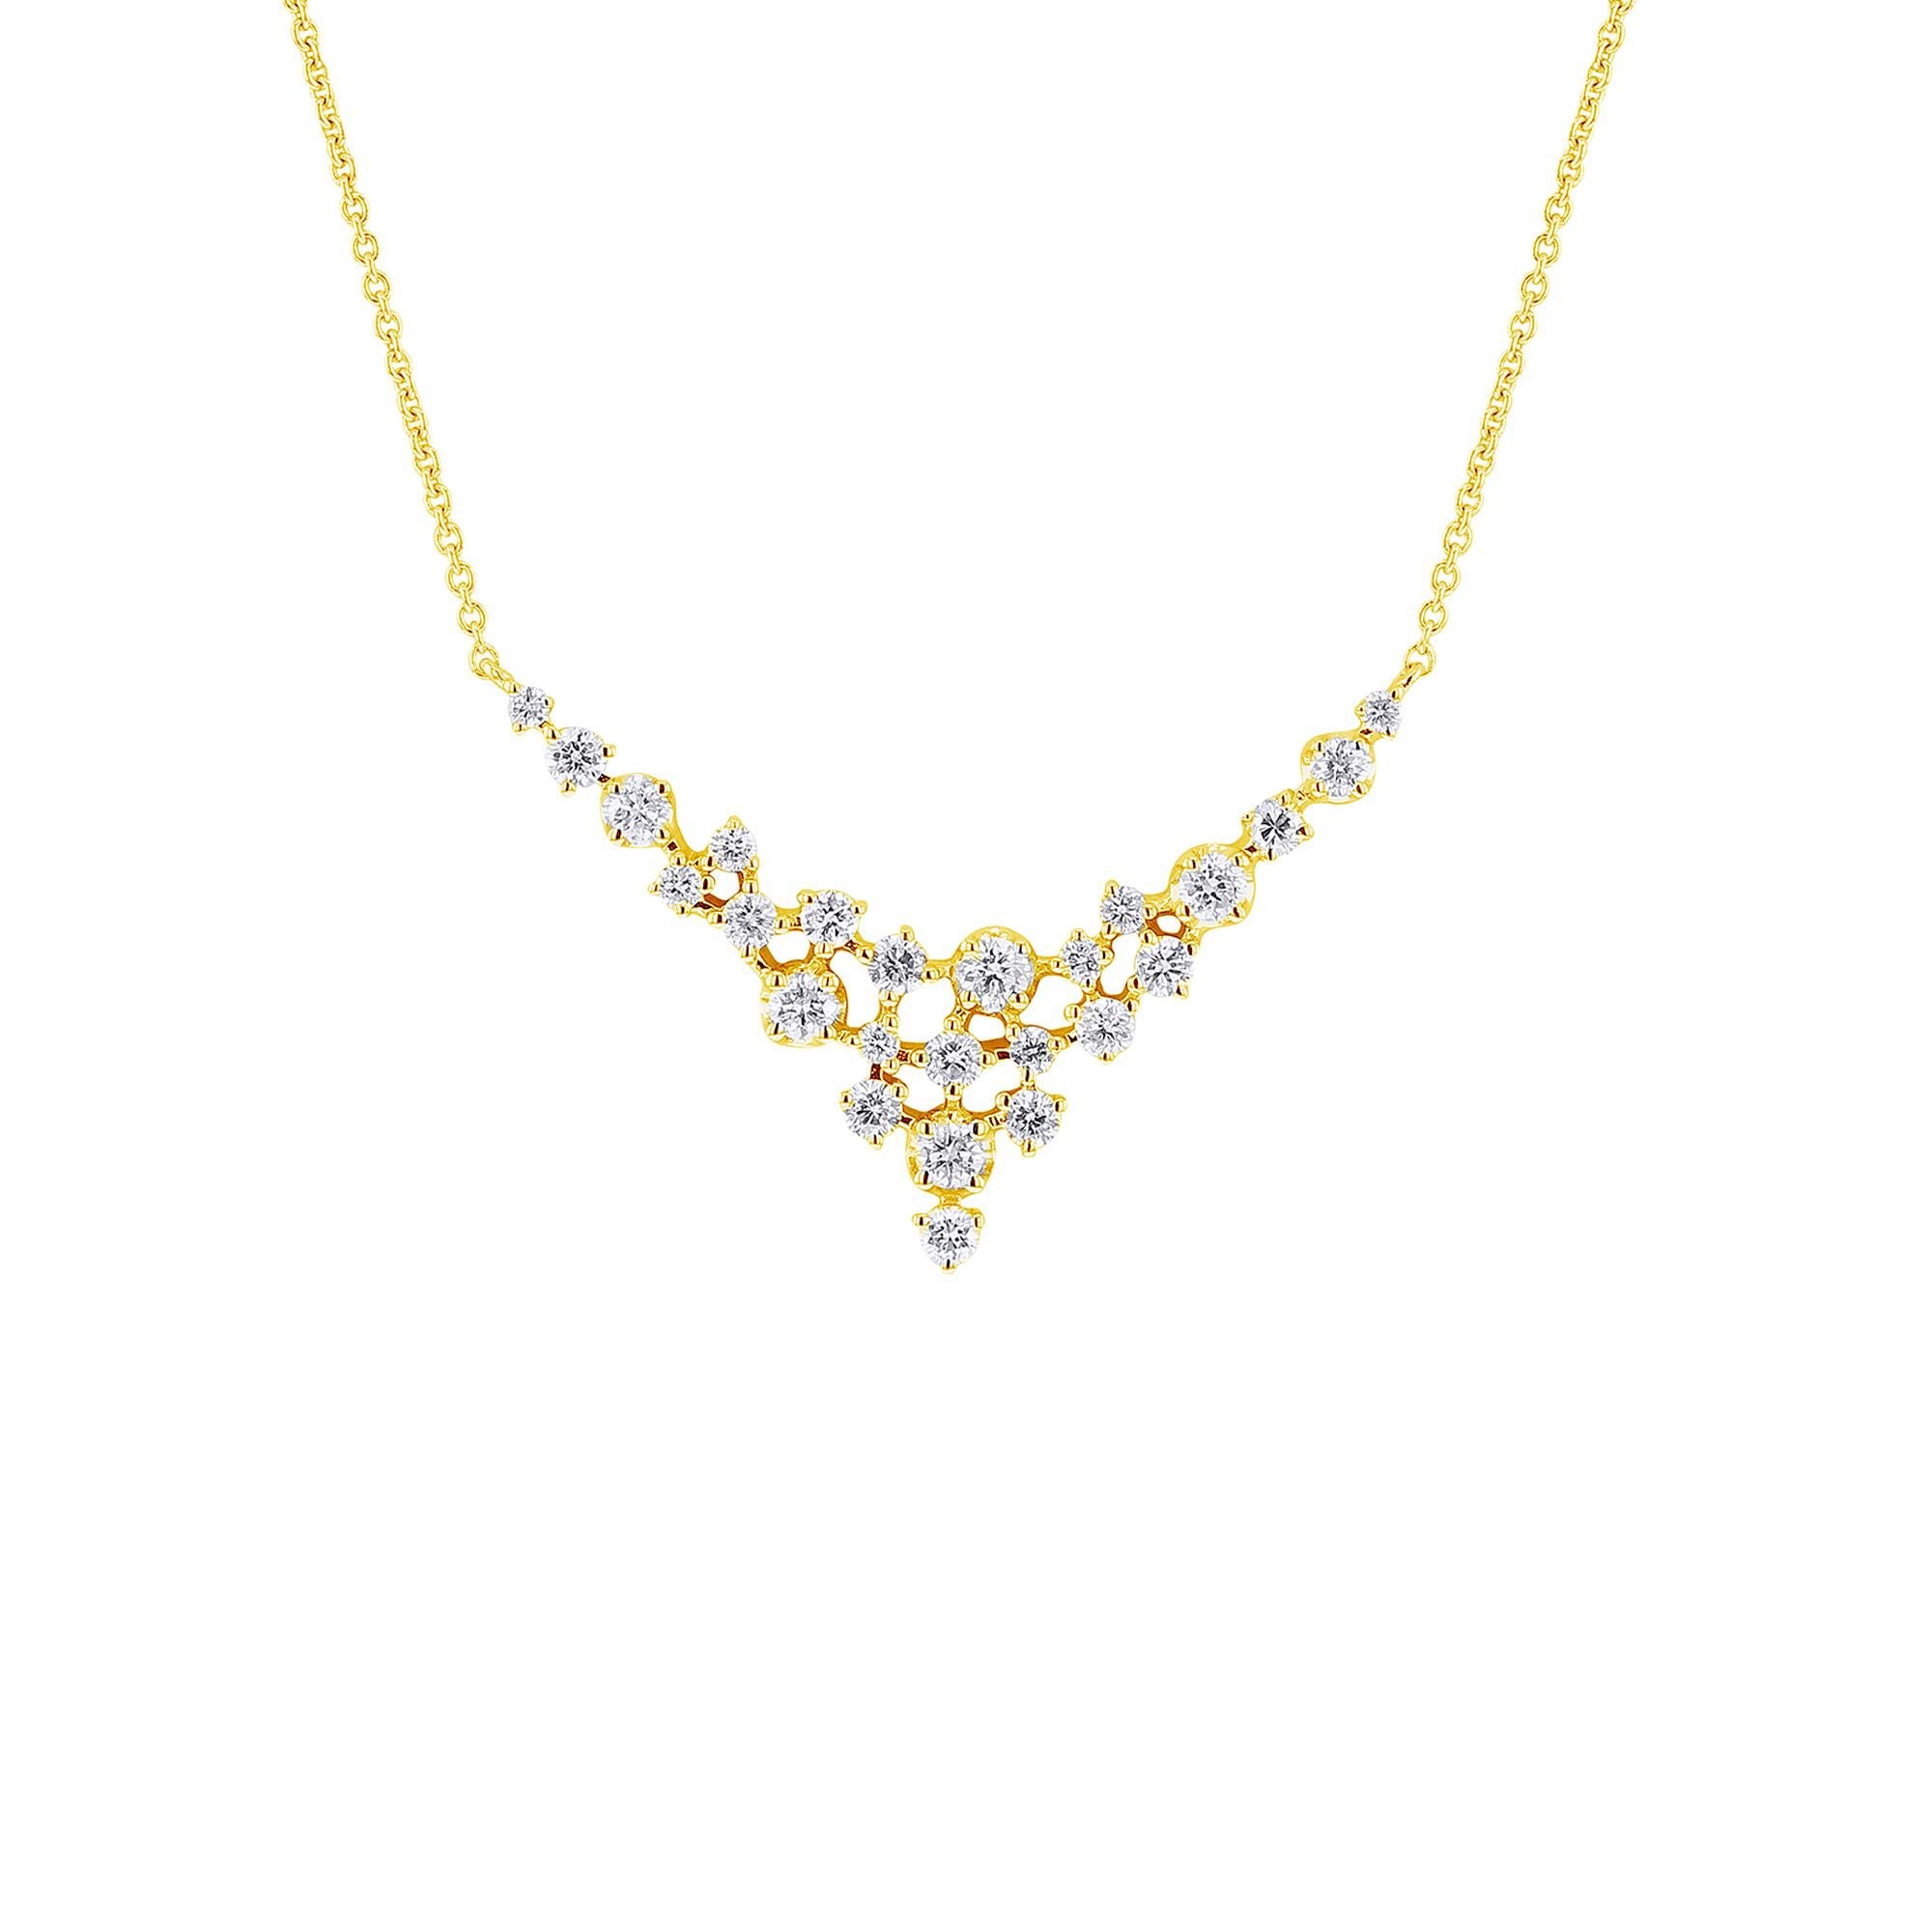 Edythes Entanglement Diamond Necklace